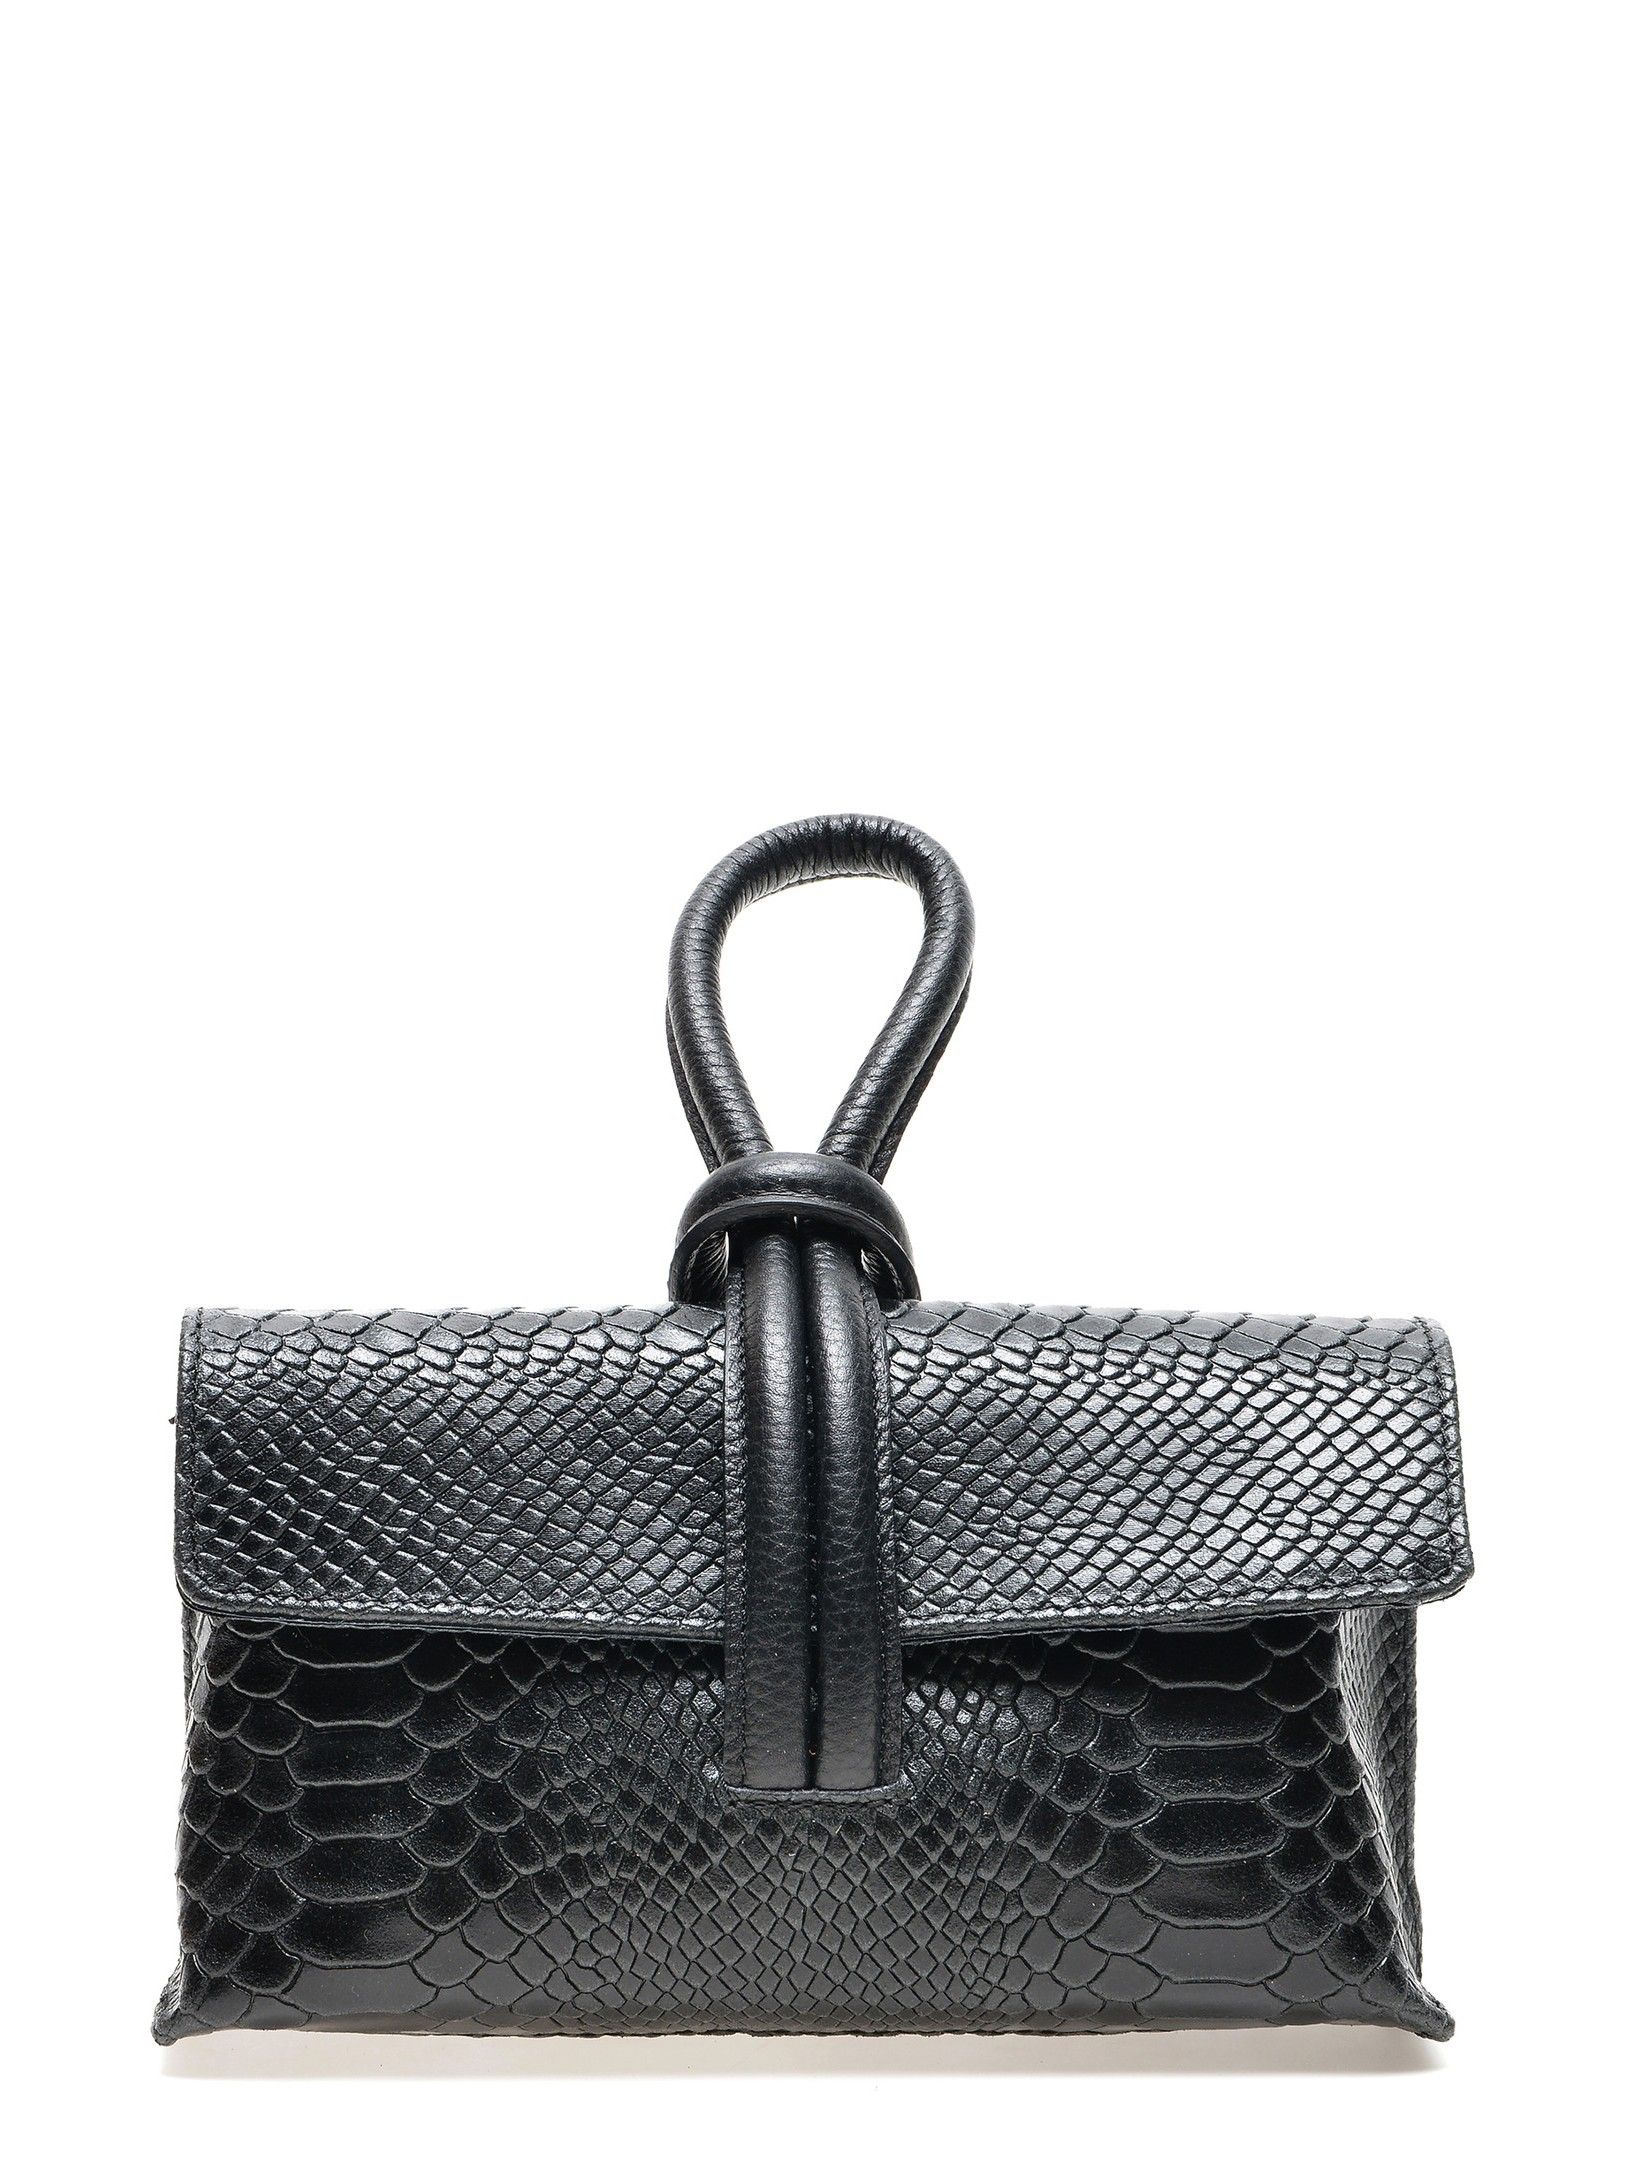 Handbag
100% cow leather
Strap closure
Interior zip pocket
Dimensions (L): 15x23x6 cm
Handle: /
Shoulder strap: 120 cm